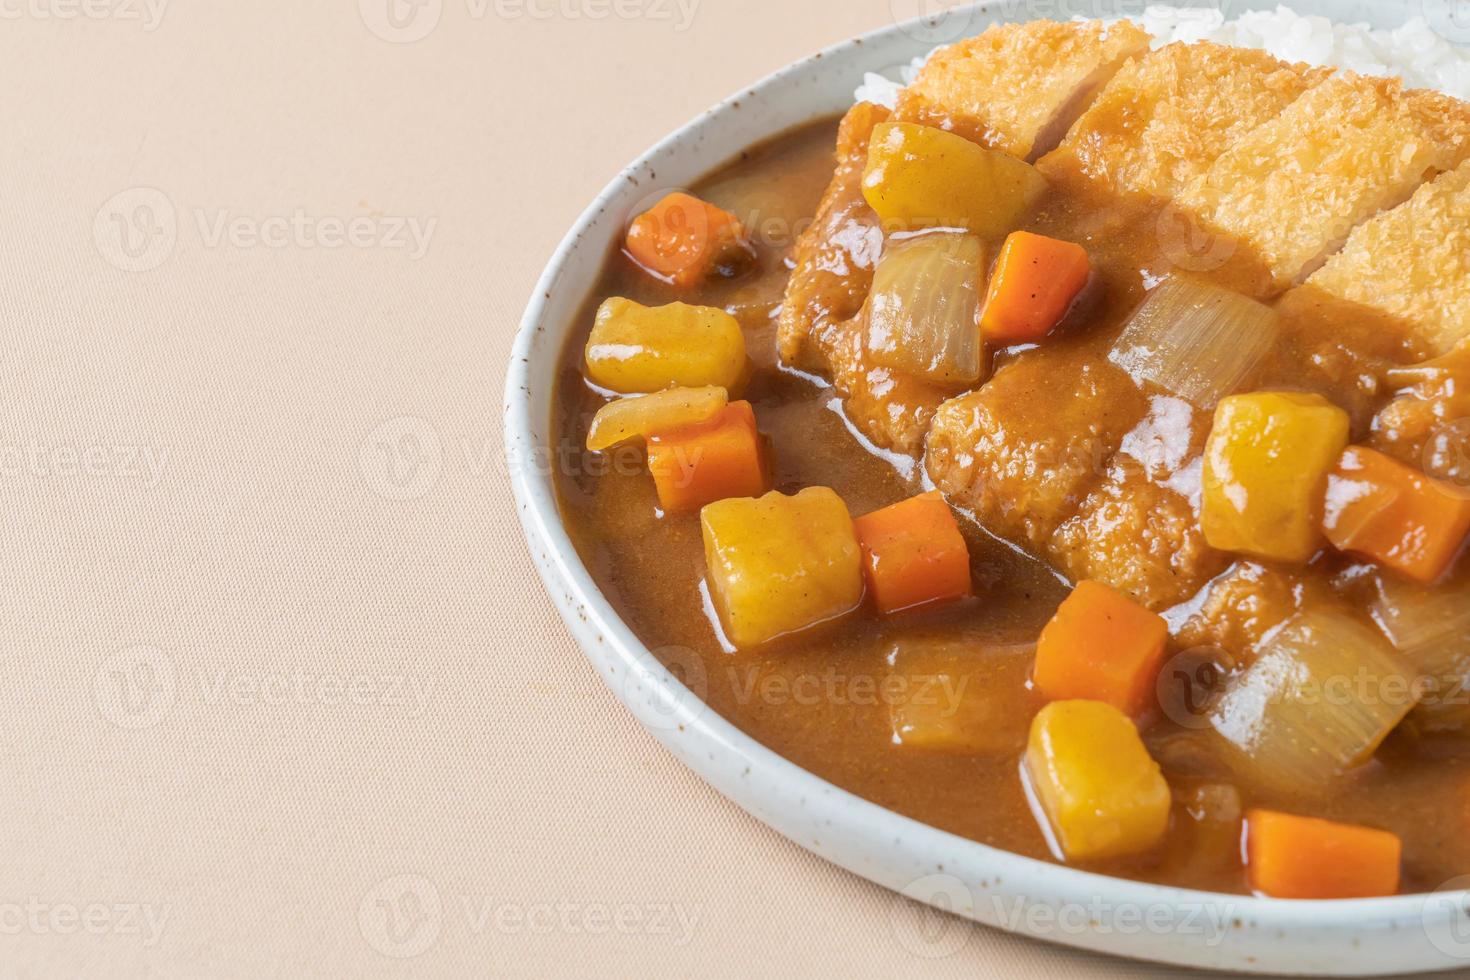 Chuleta de cerdo frita al curry con arroz - estilo de comida japonesa foto